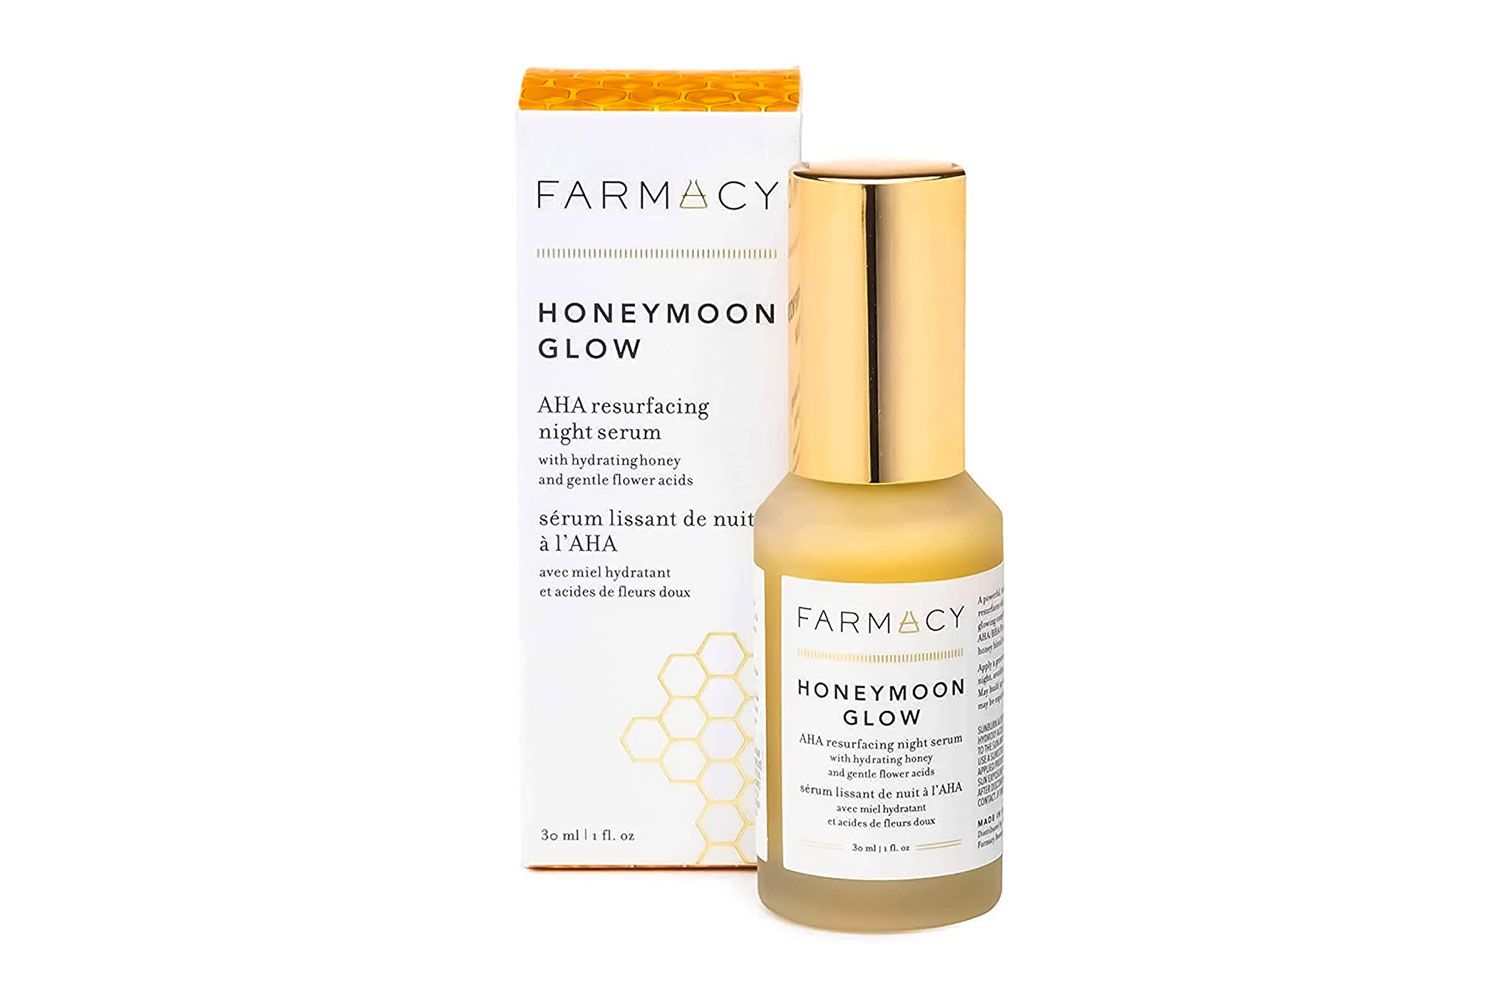 Farmacy Honeymoon Glow AHA Resurfacing Night Serum